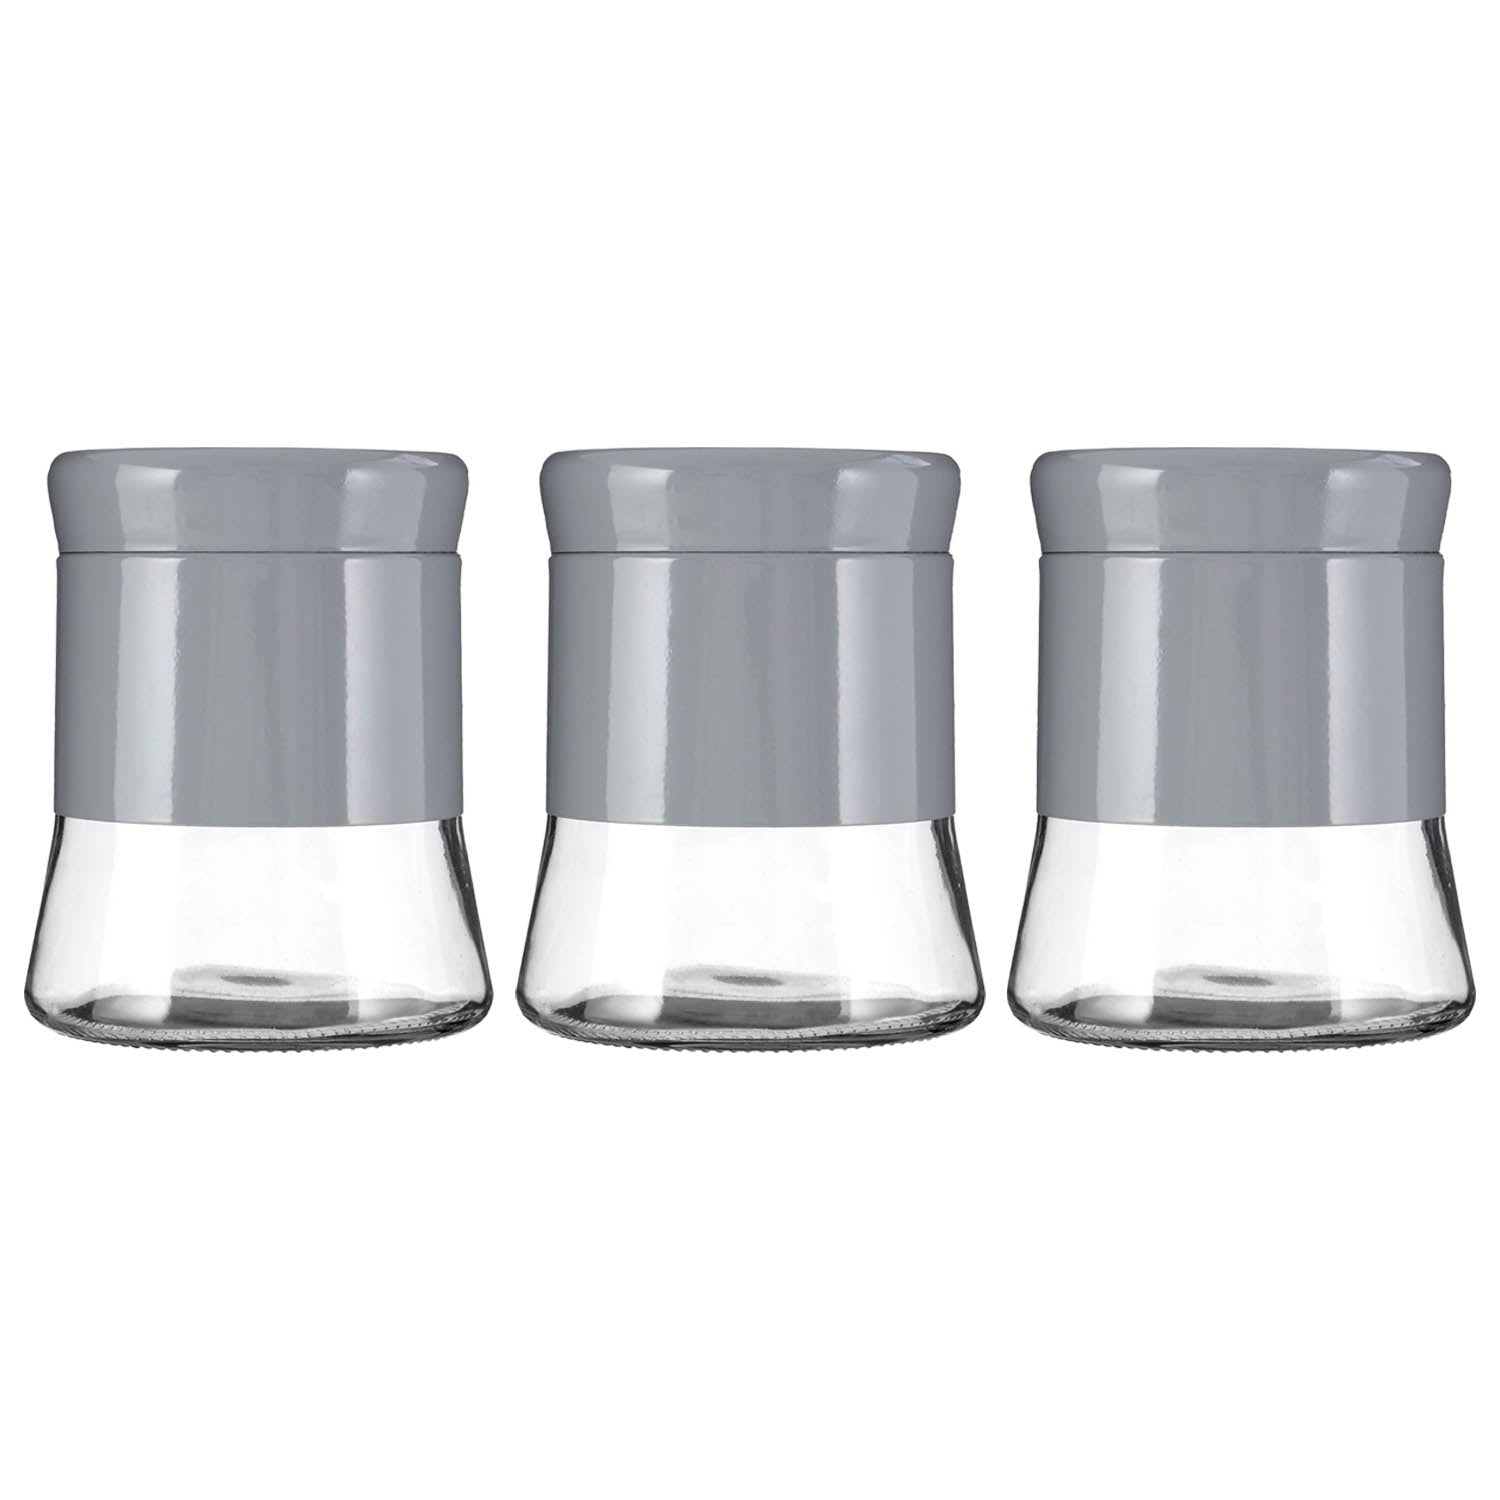 Set of 3 800ml Grey Stainless Steel Glass Storage Jars